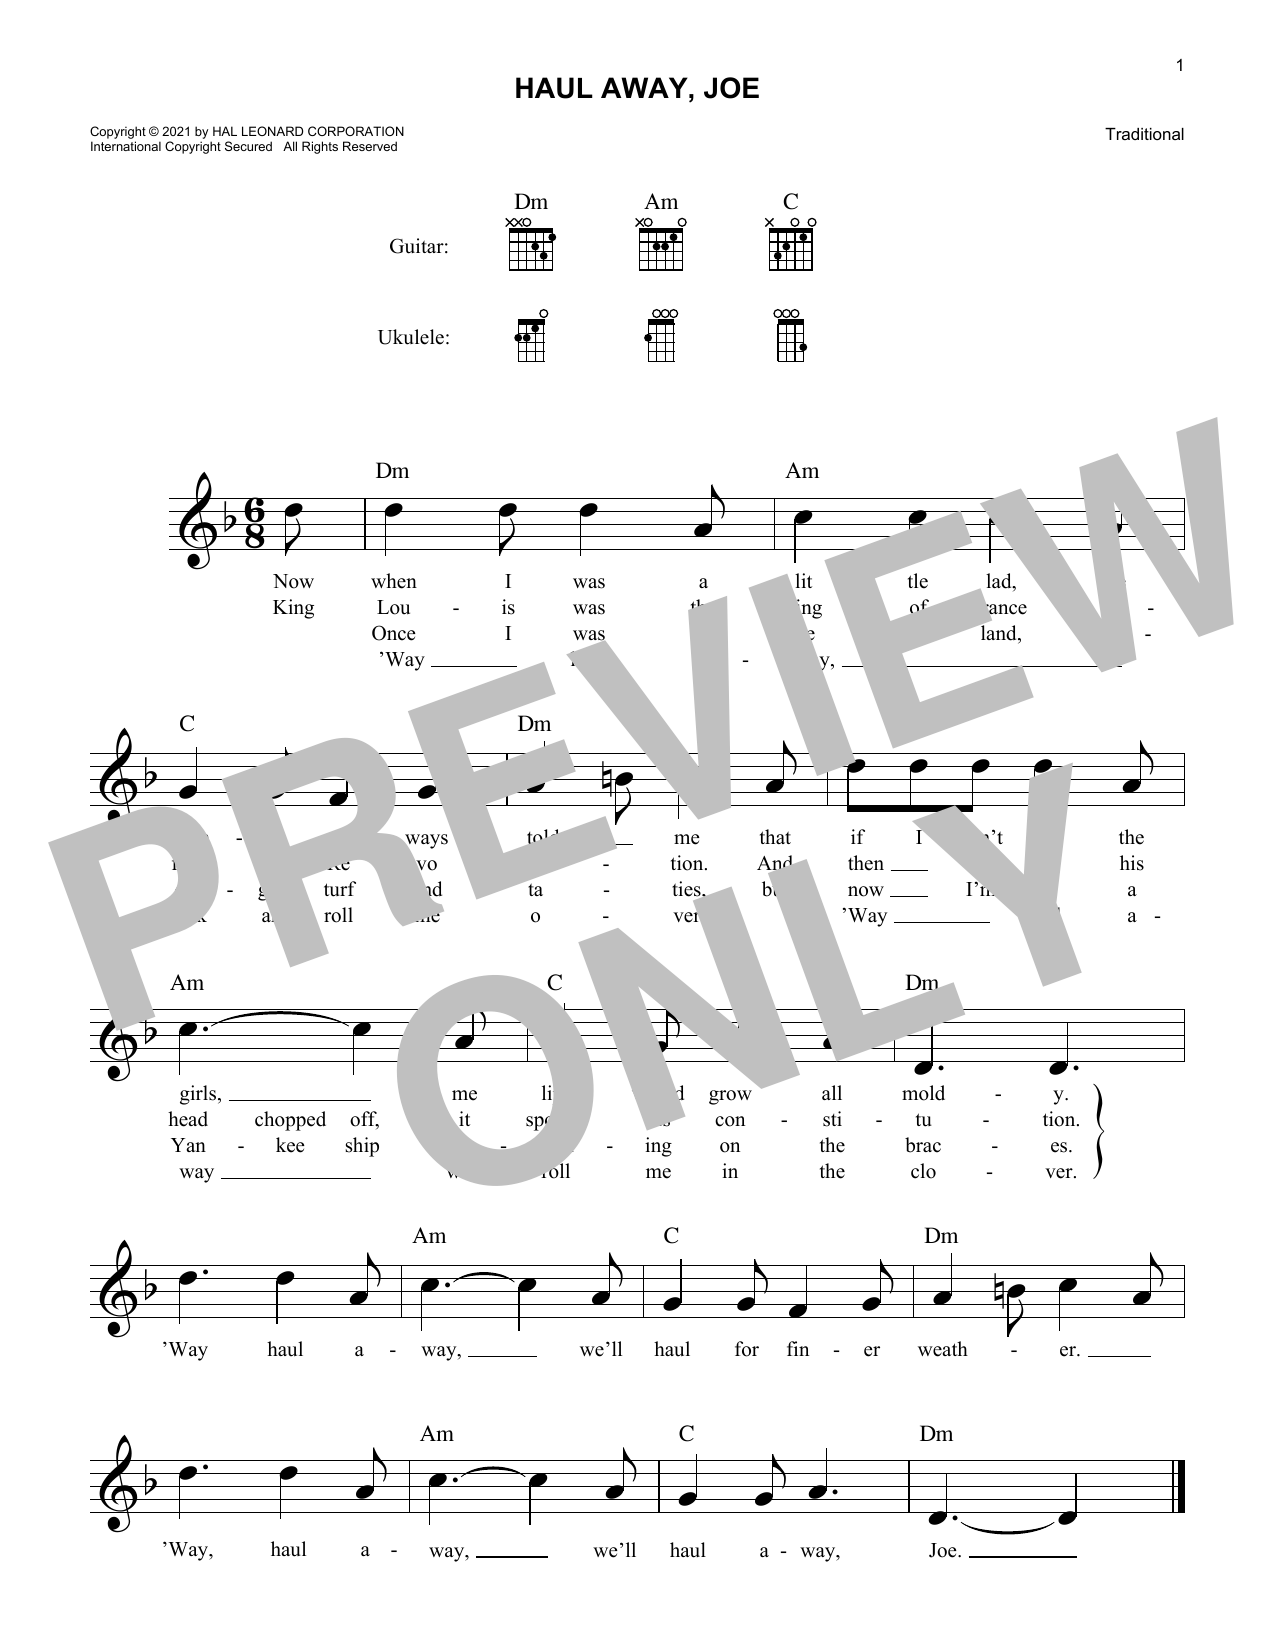 Traditional Haul Away, Joe Sheet Music Notes & Chords for Lead Sheet / Fake Book - Download or Print PDF